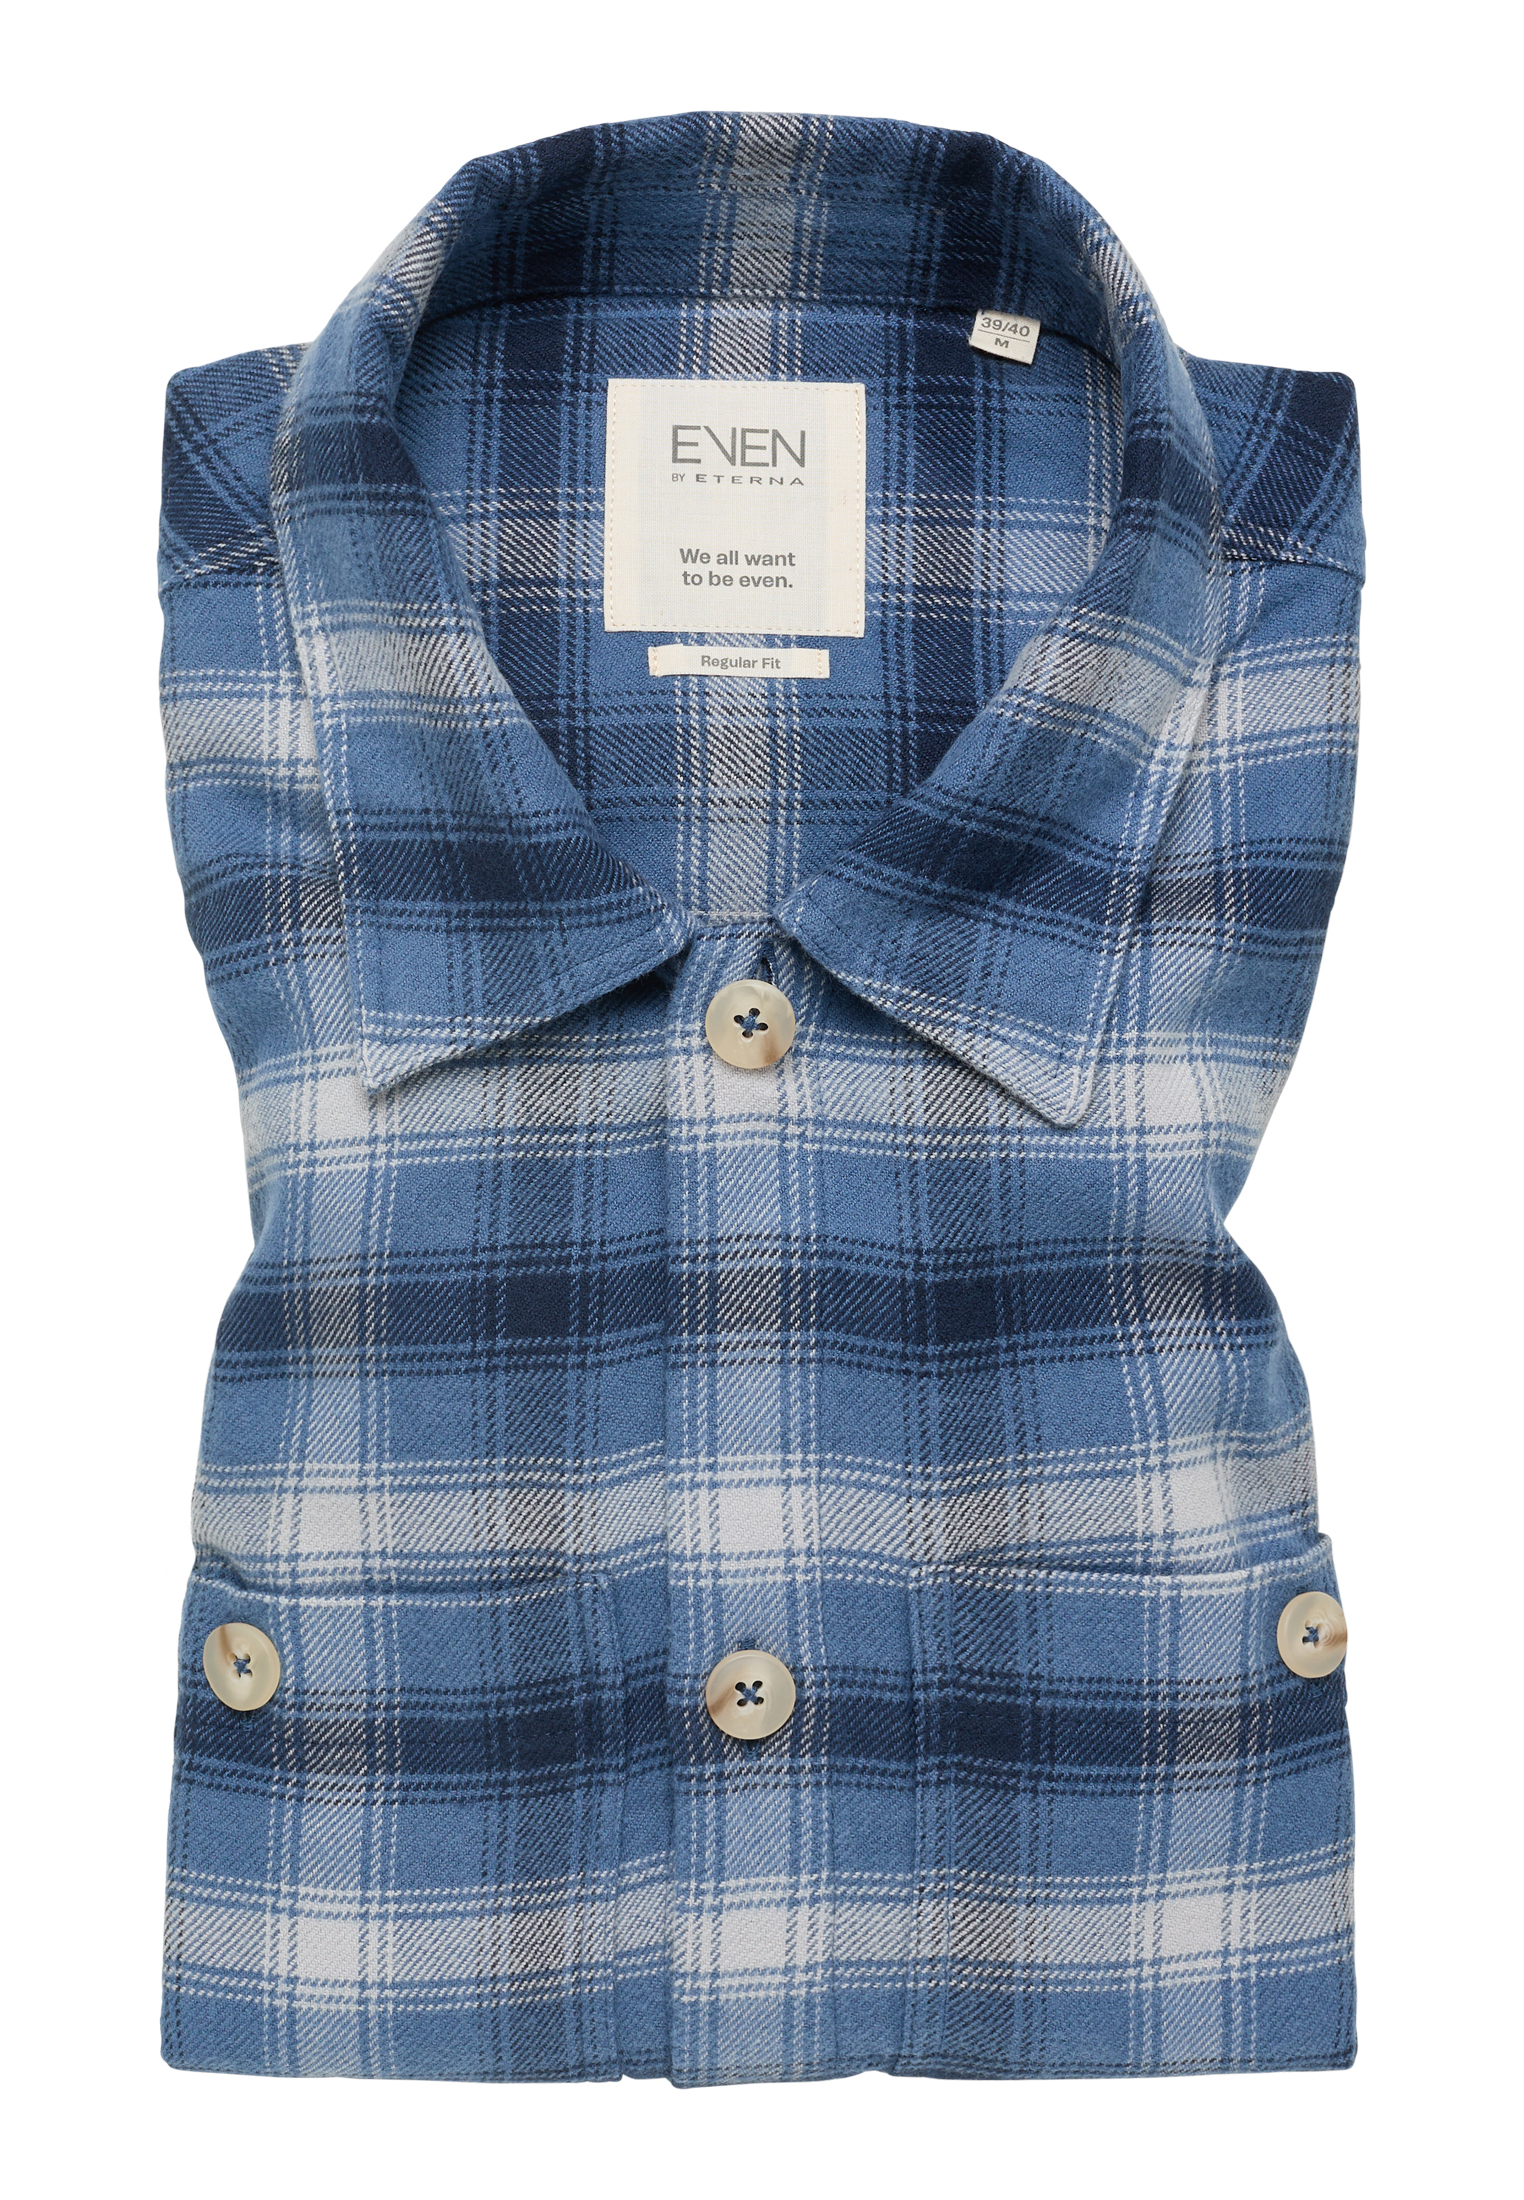 MODERN FIT Shirt in M long checkered sleeve | | | blue-gray 1JA00038-01-63-M-1/1 blue-gray 